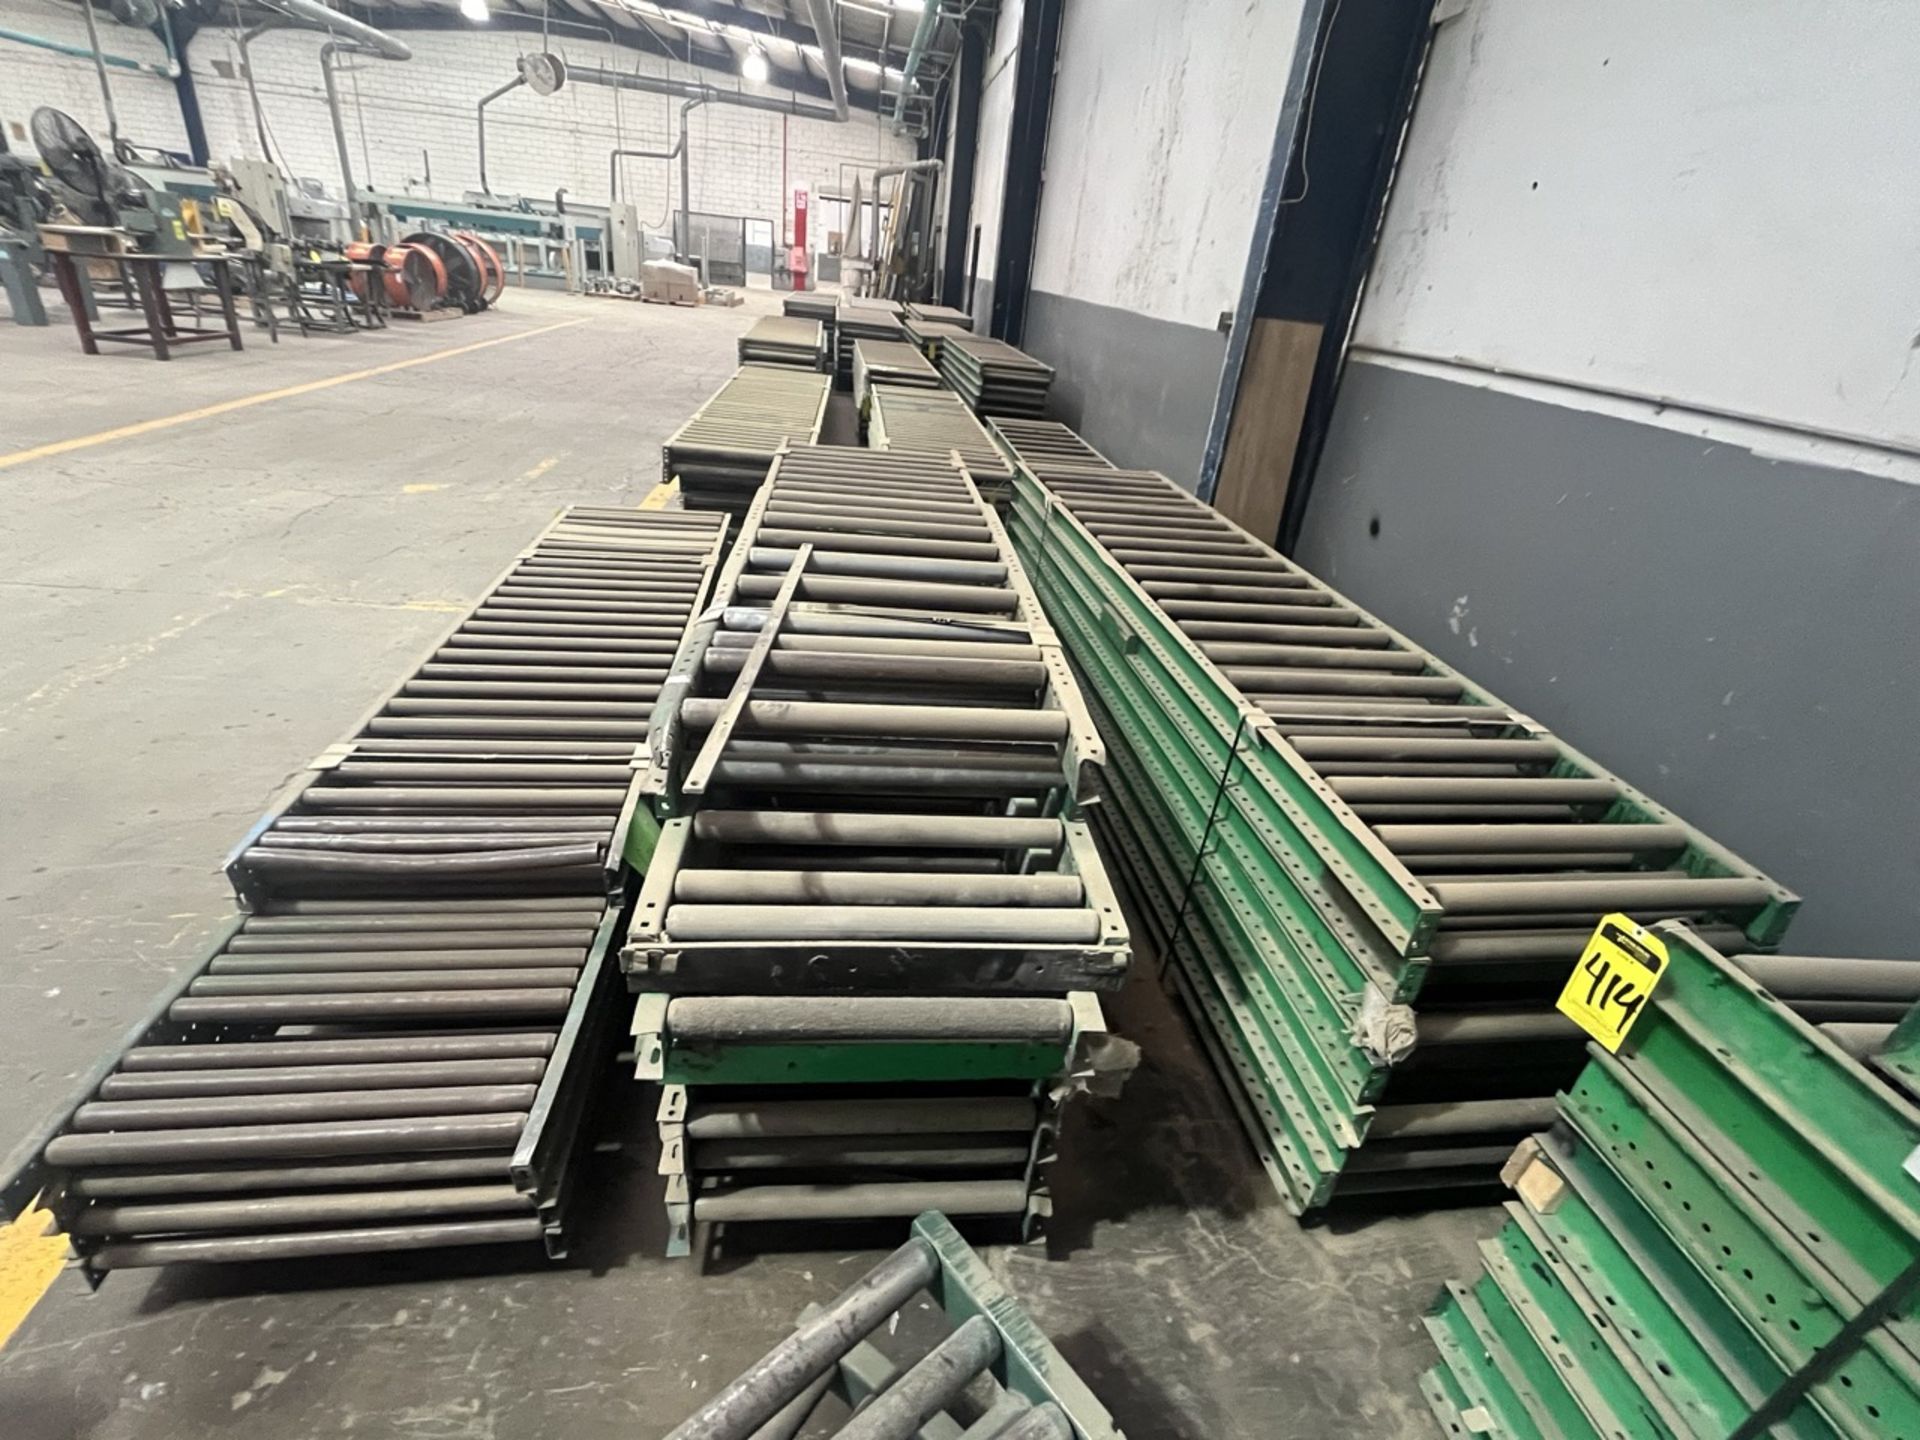 21 pieces of roller conveyor belt measuring approx. 66 cm wide x 3.05 m long each. / 21 Piezas de b - Image 4 of 5